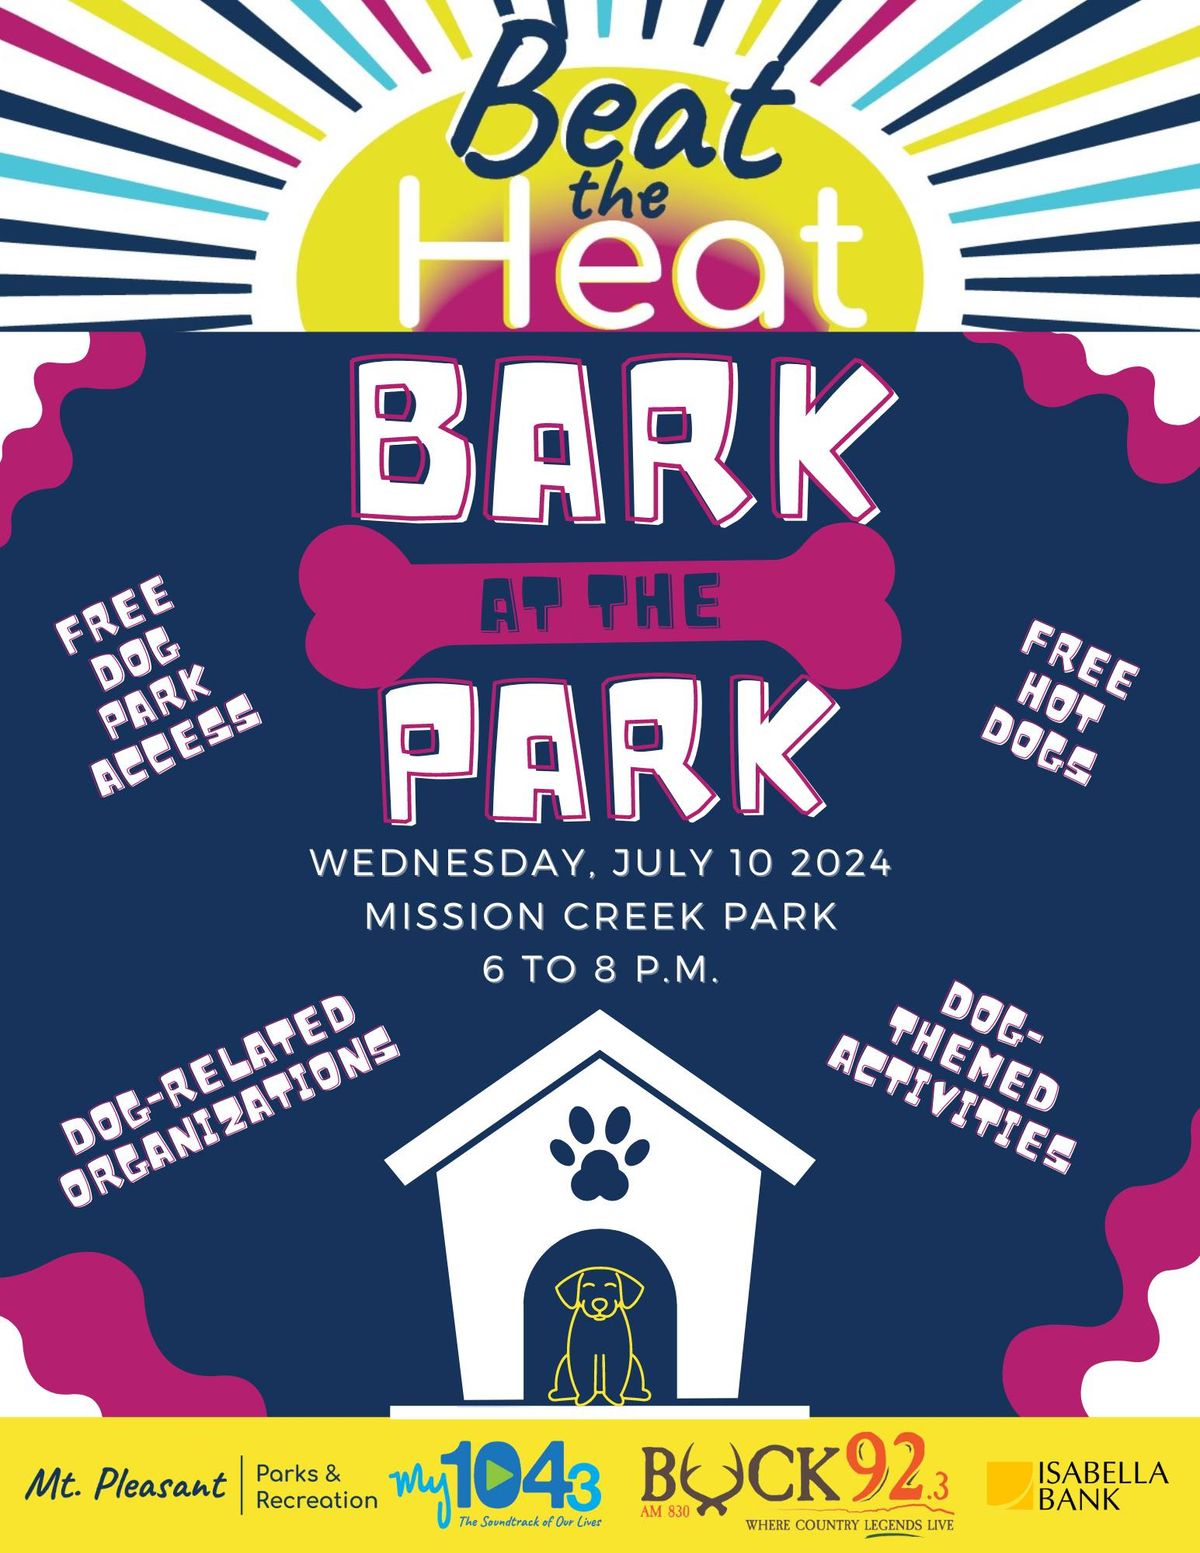 Beat the Heat #3-Bark at the Park